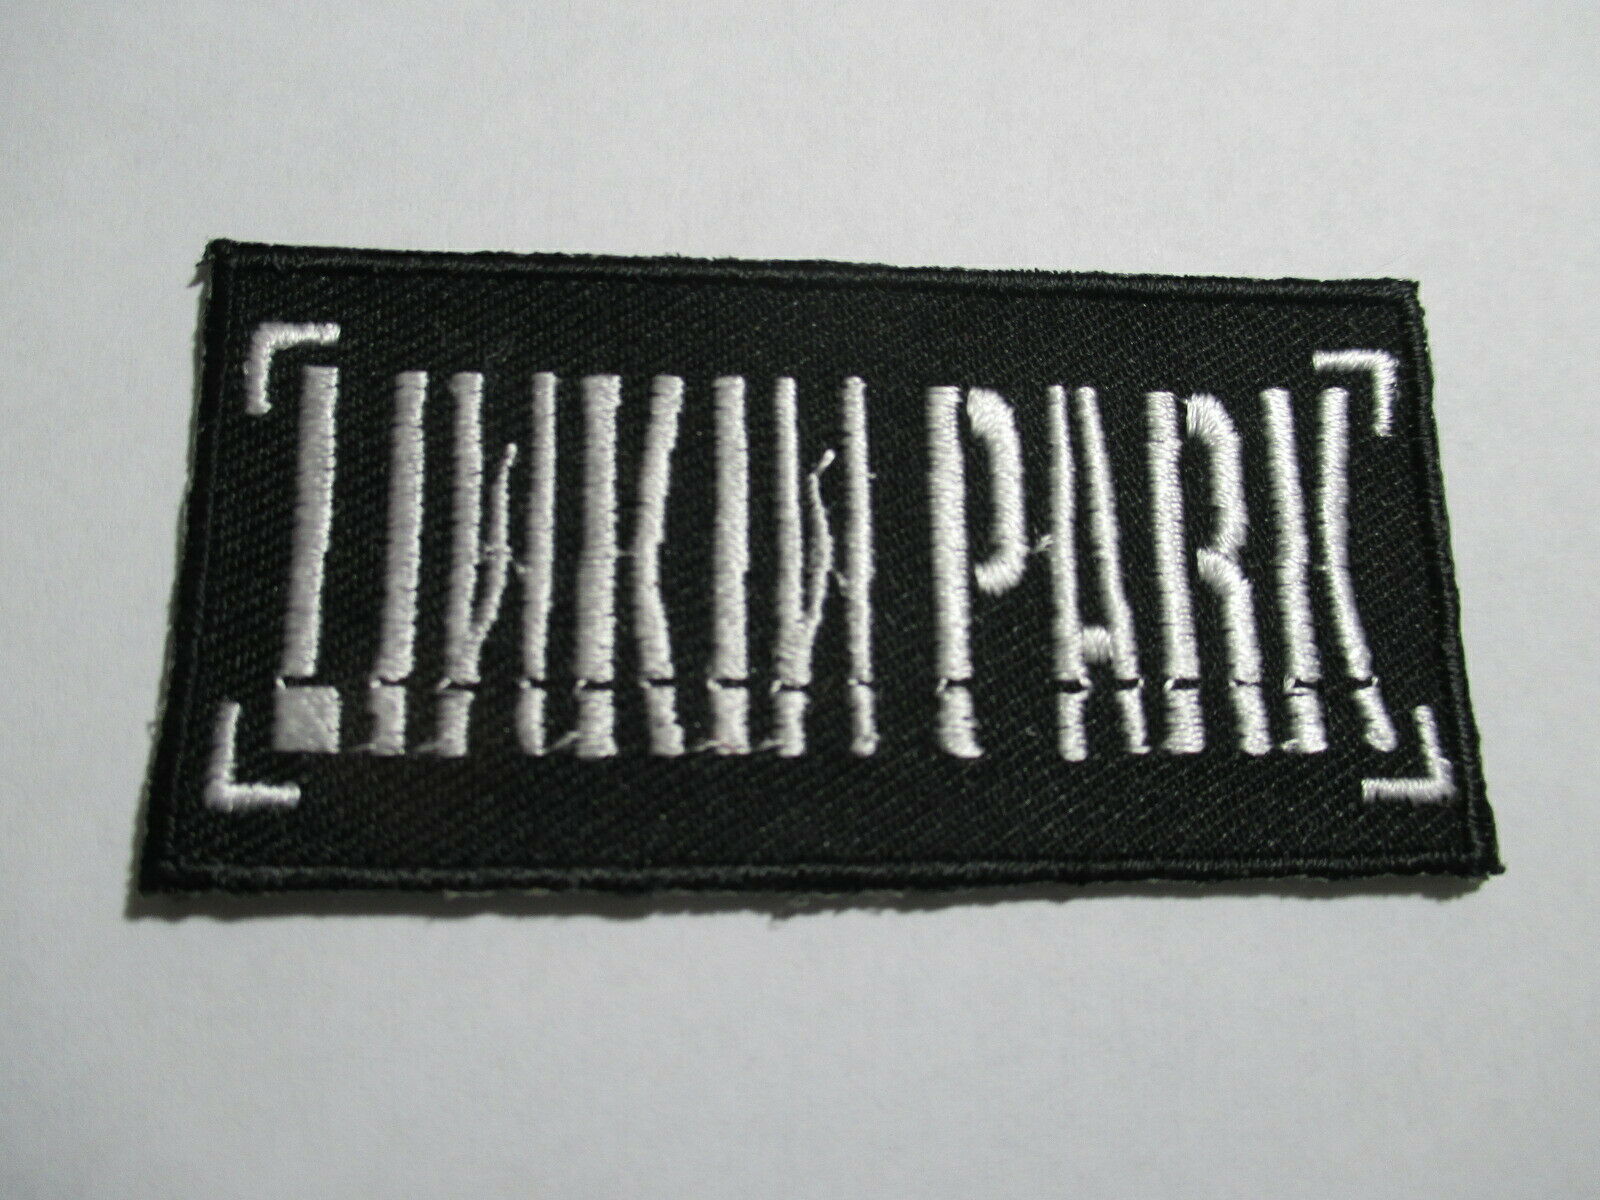 Linkin Park Patch Music Rock & Roll Pop Band Group Vintage Nos Original